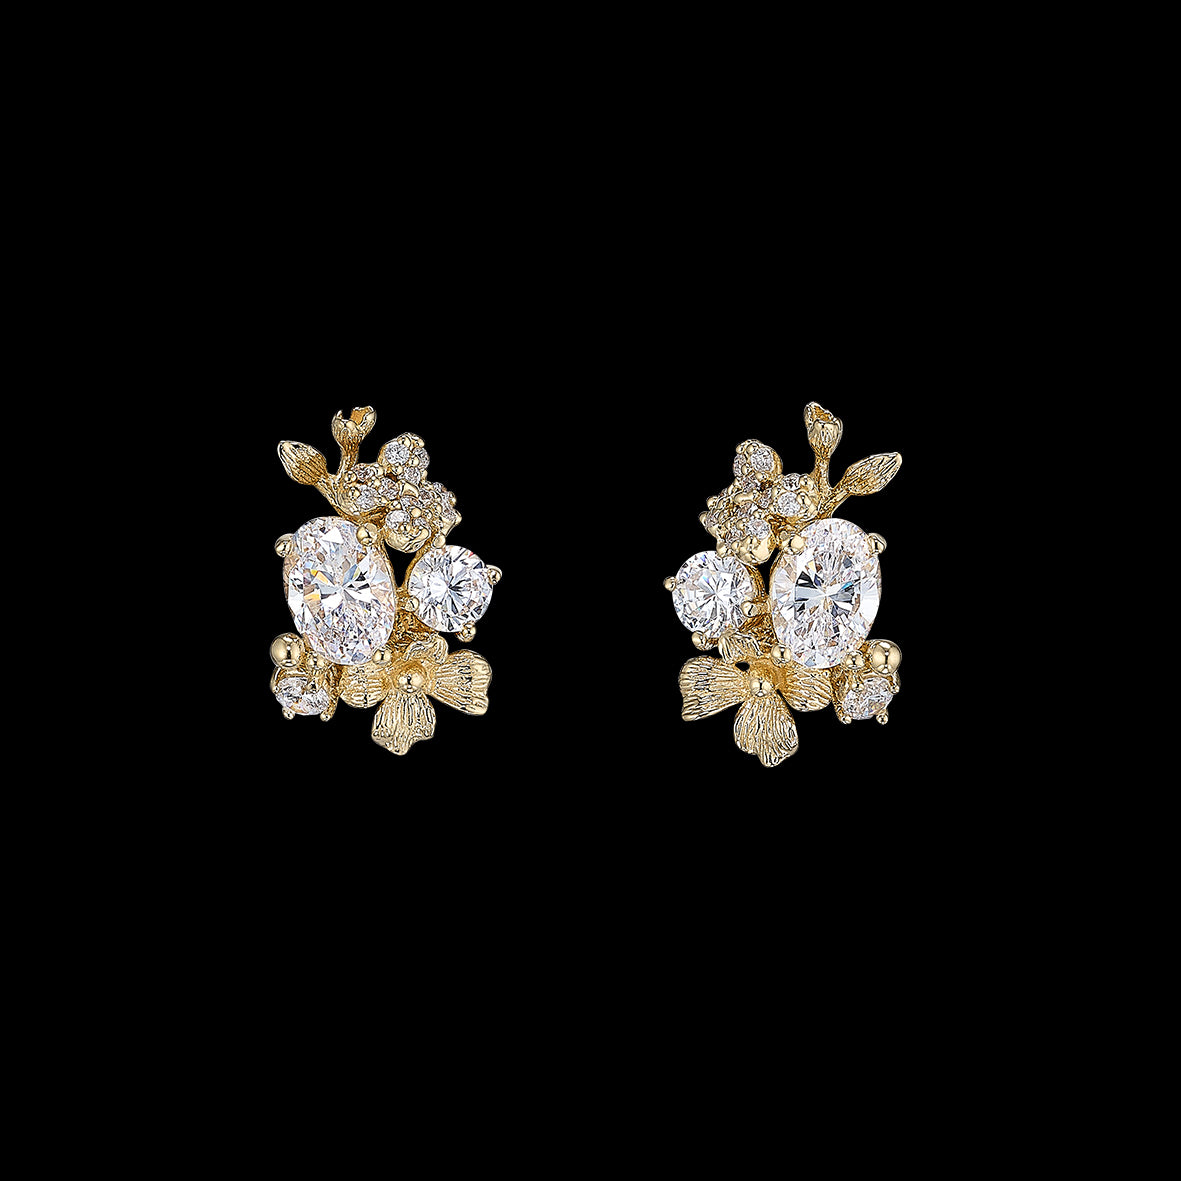 Marquise diamond earrings in 14K yellow gold | KLENOTA